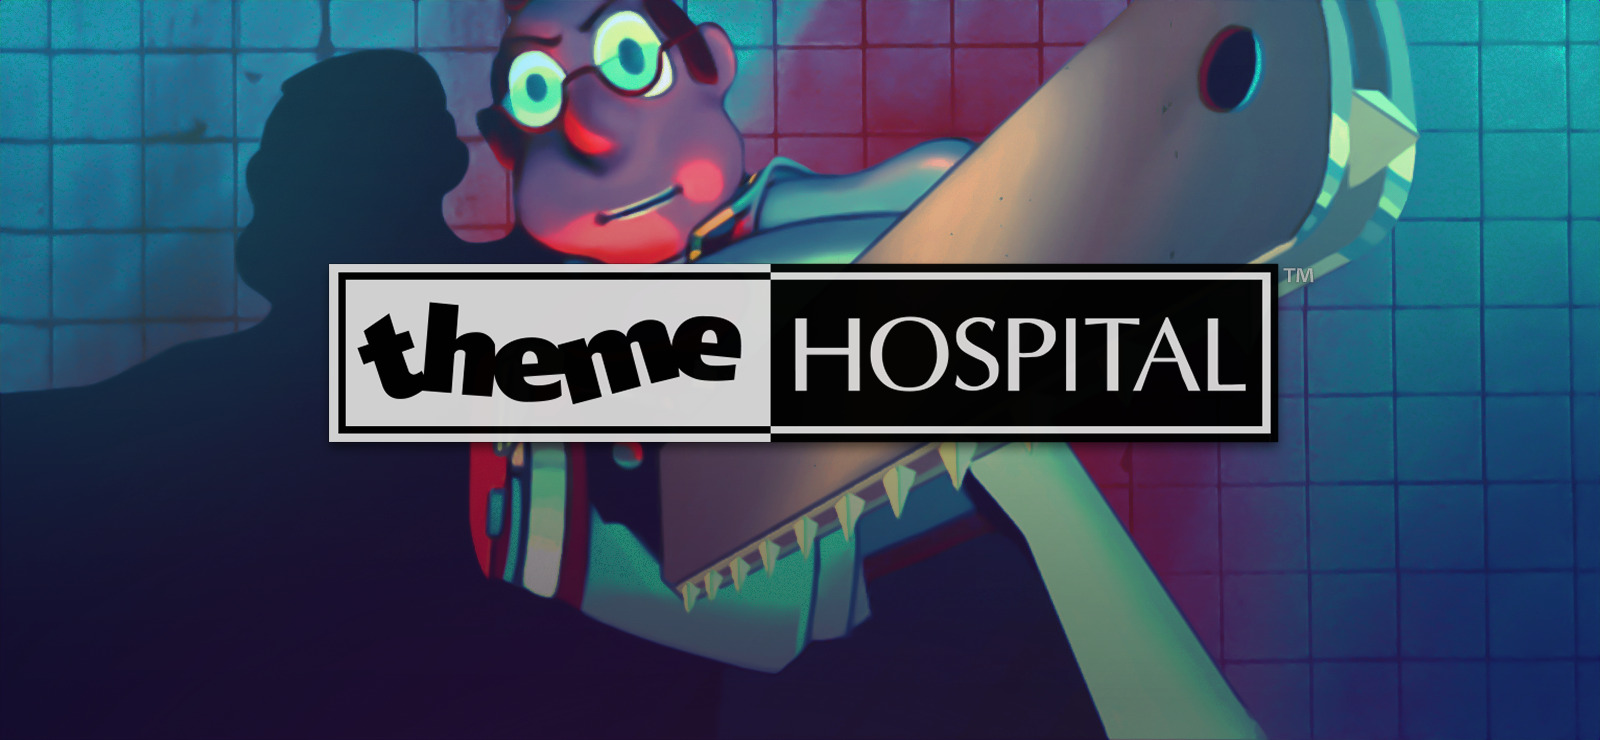 Theme Hospital - PC